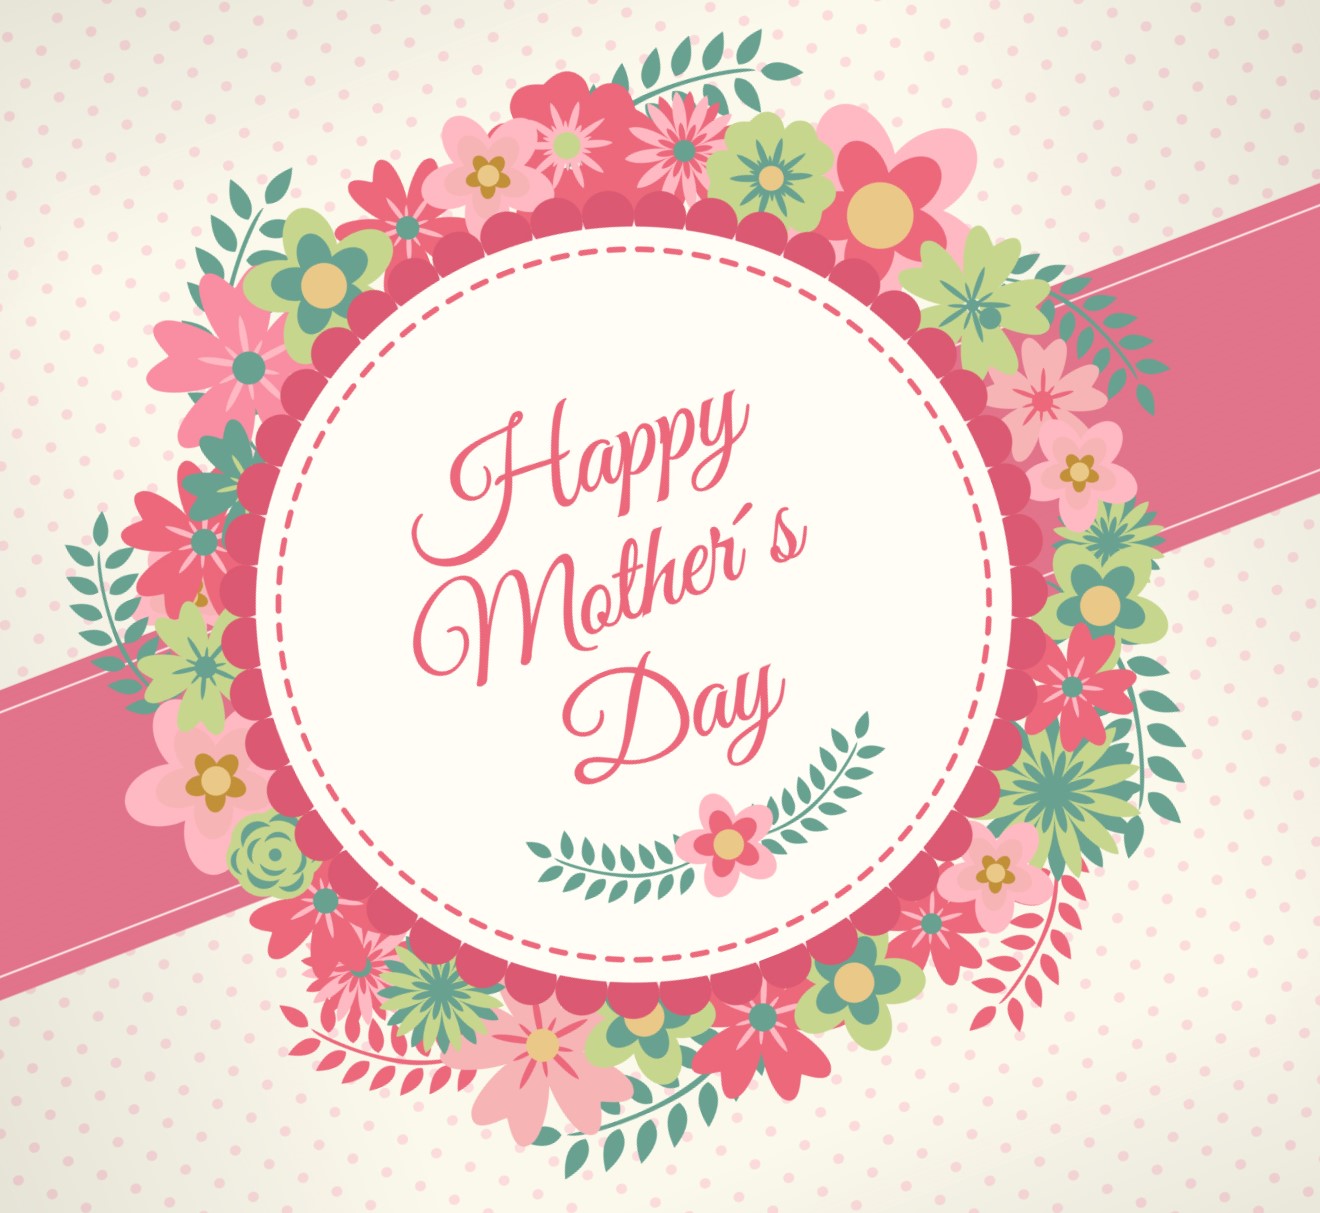 Матушка на английском. Открытка ко Дню матери на английском языке. С днем матери на английском. Happy mothers Day открытки. Mother's Day открытка.